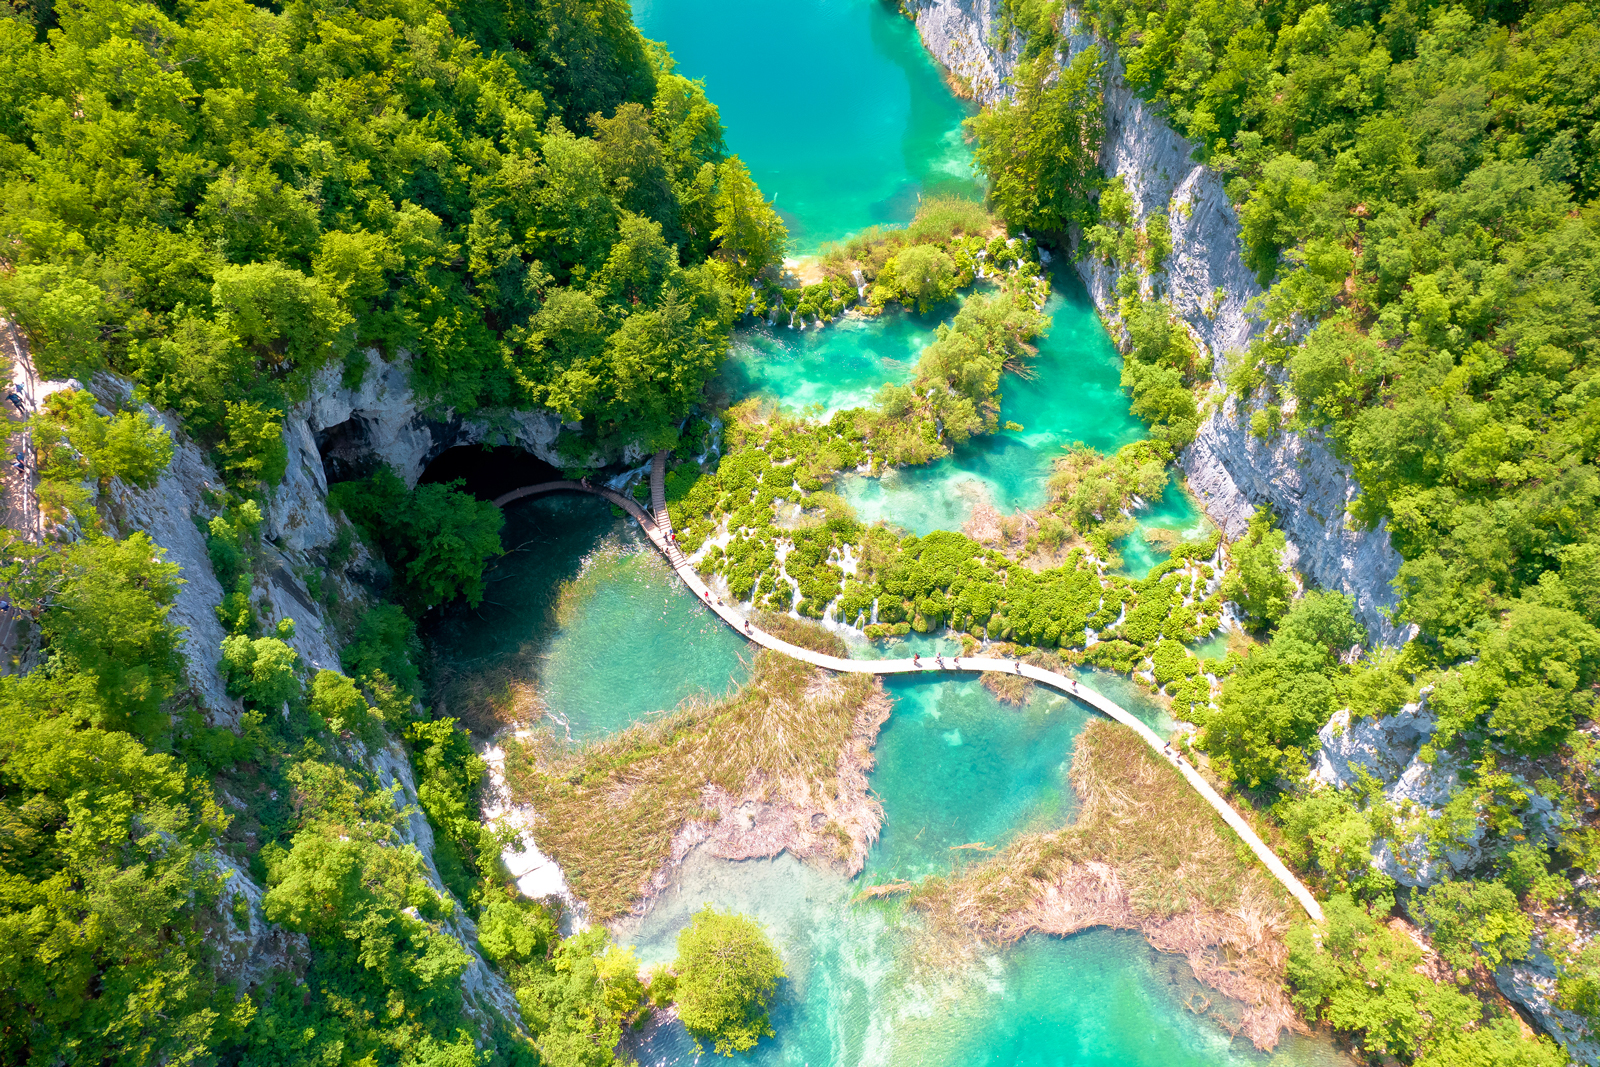 #2 Plitvice lakes National Park